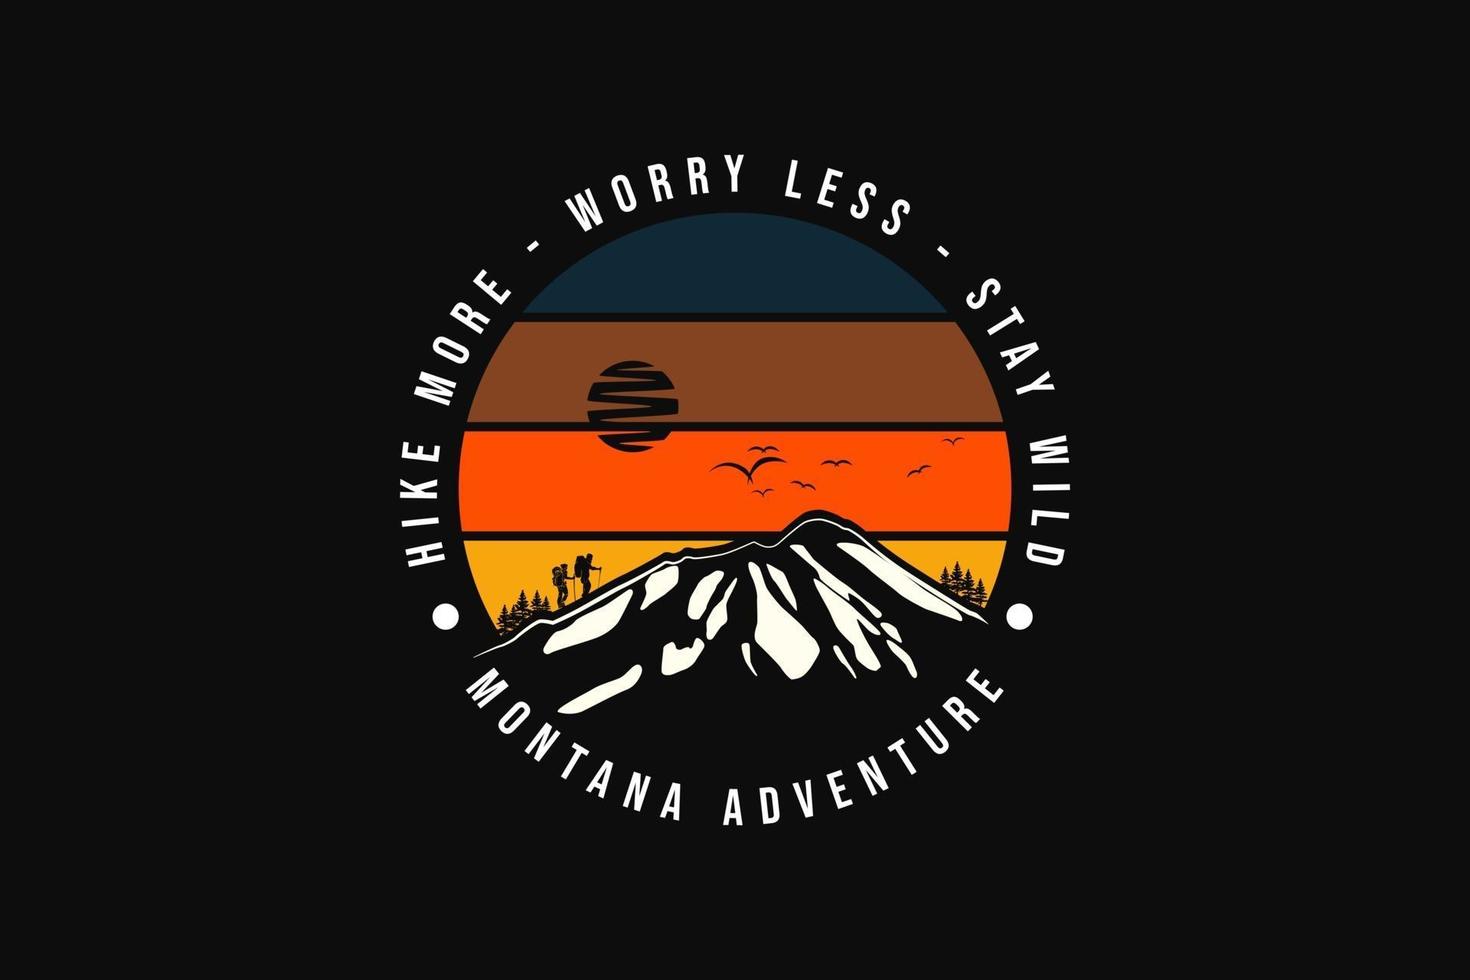 Montana adventure, silhouette retro style vector